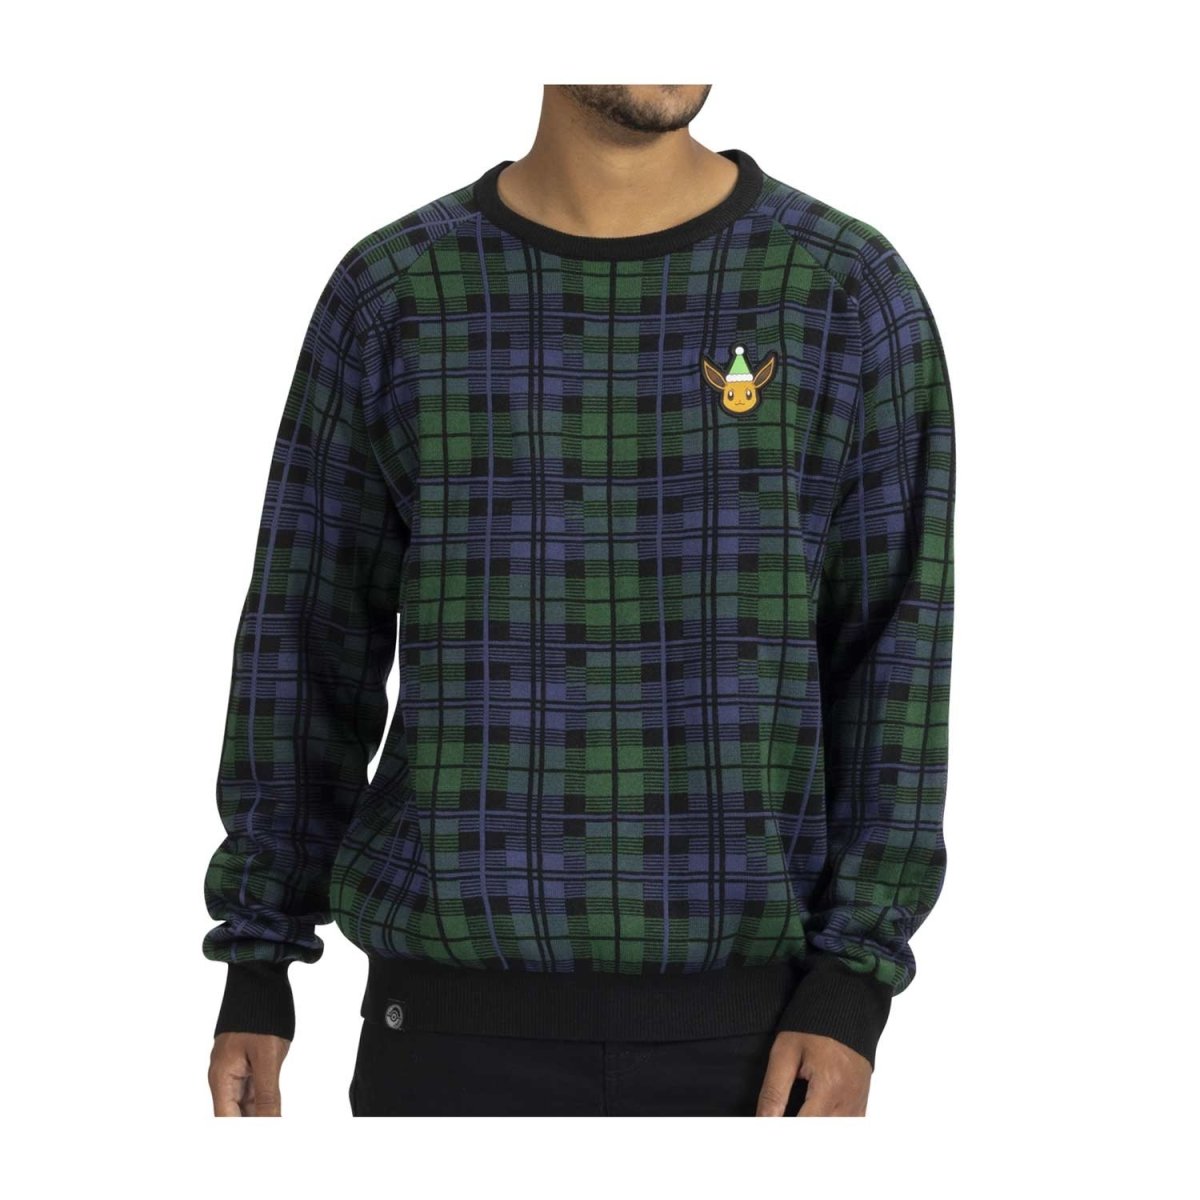 Eevee Green & Black Plaid Knit Sweater - Adult